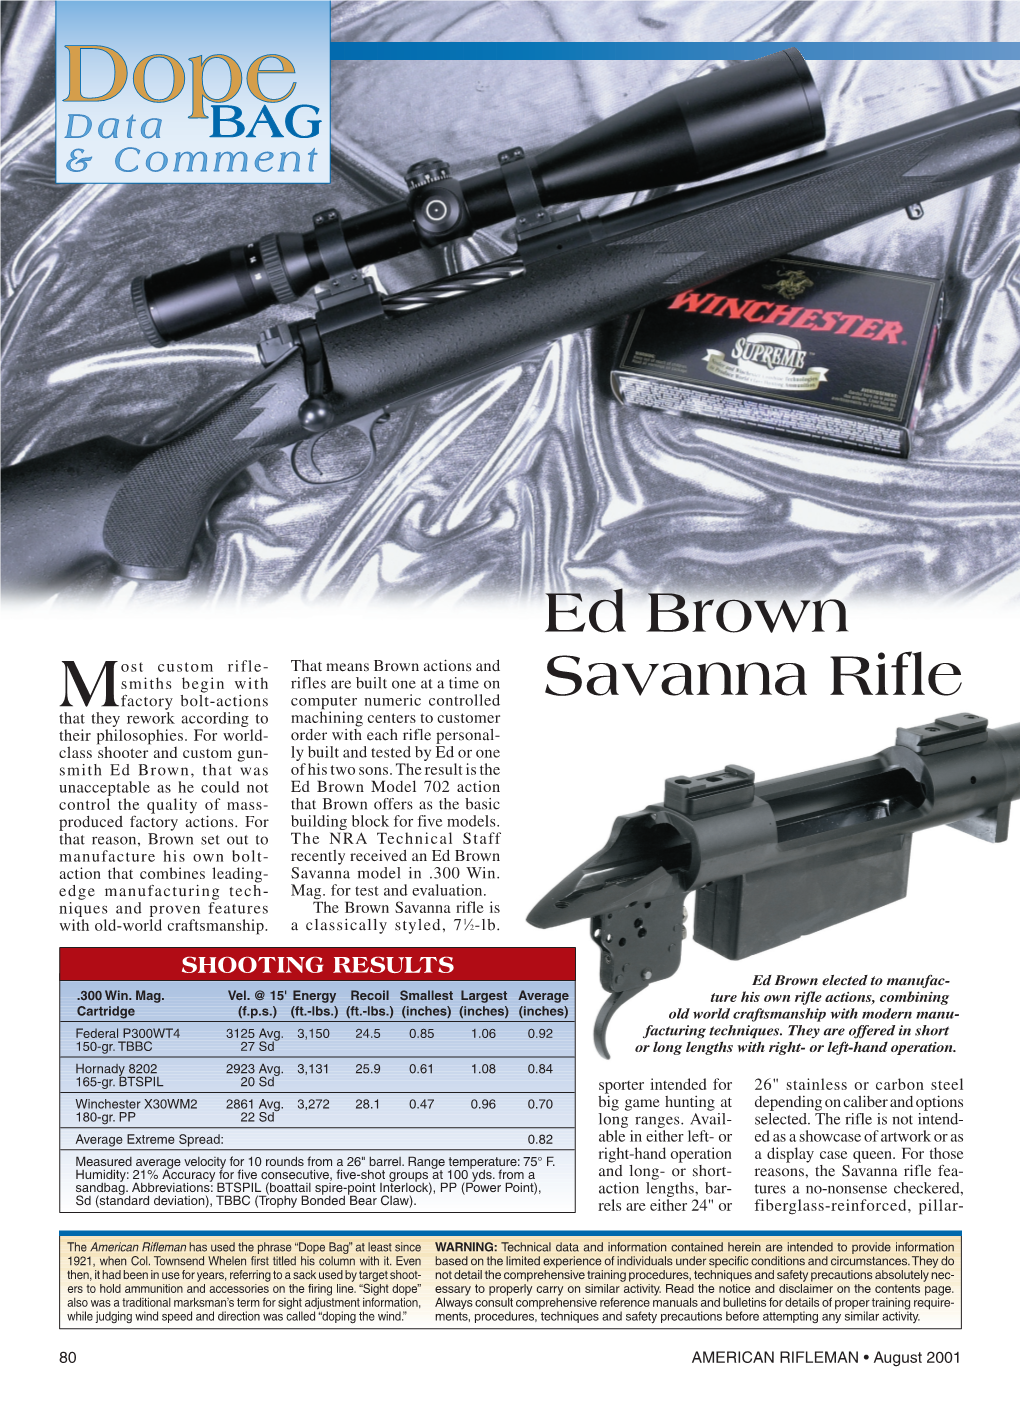 Download AR Dope Bag August 2001: Ed Brown Savanna Rifle